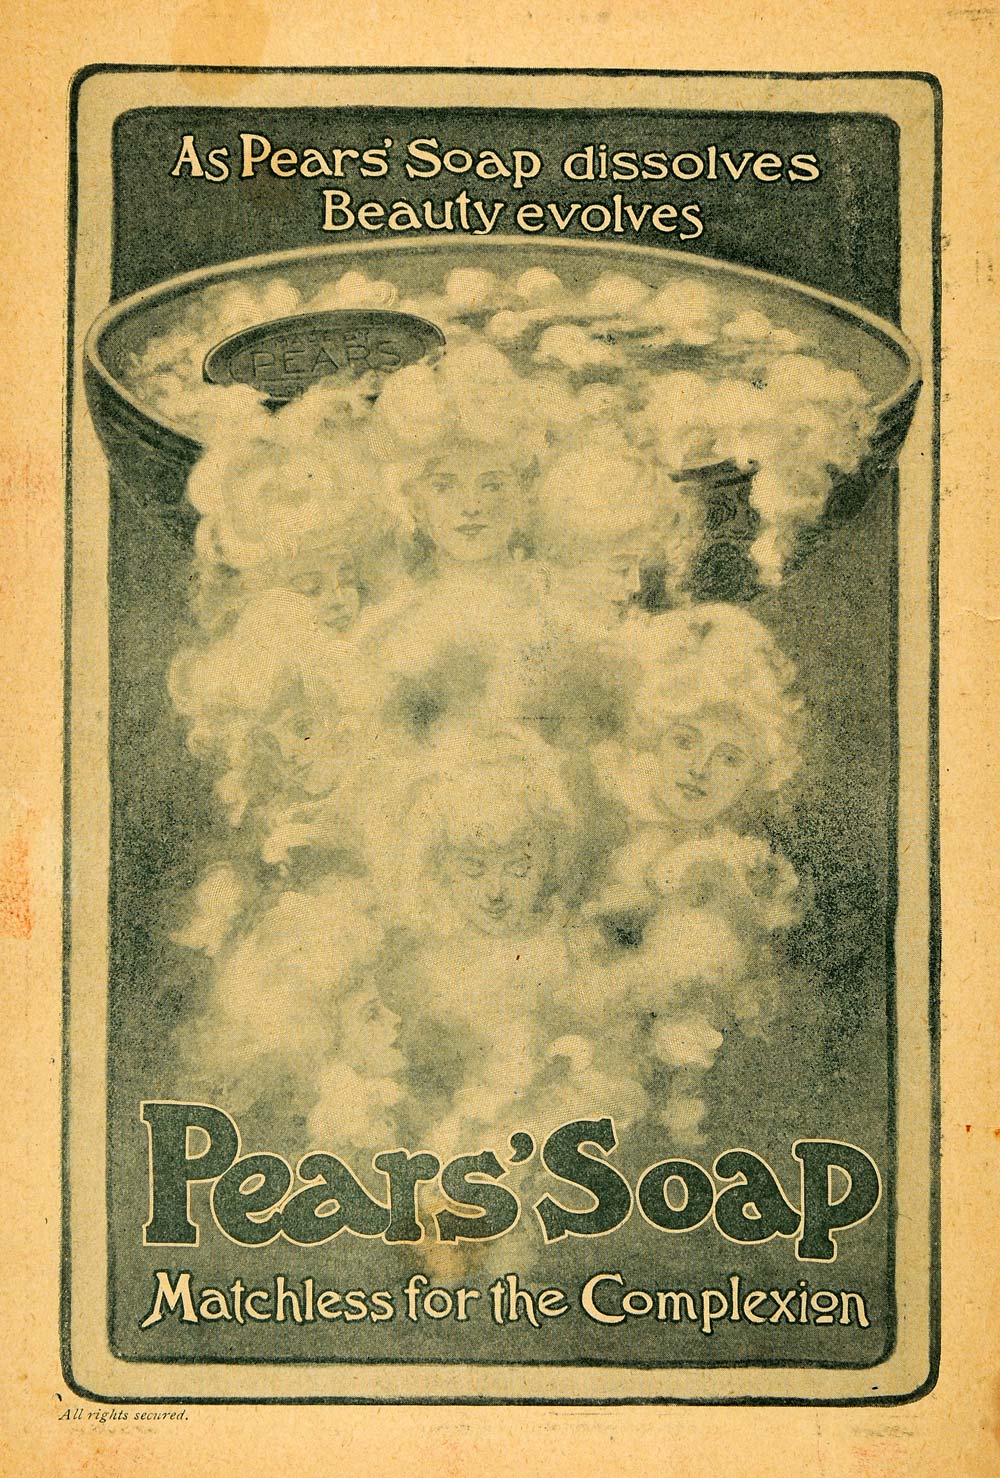 1902 Ad Pears Complexion Soap Wash Bowl Bubbles Faces - ORIGINAL TOM1